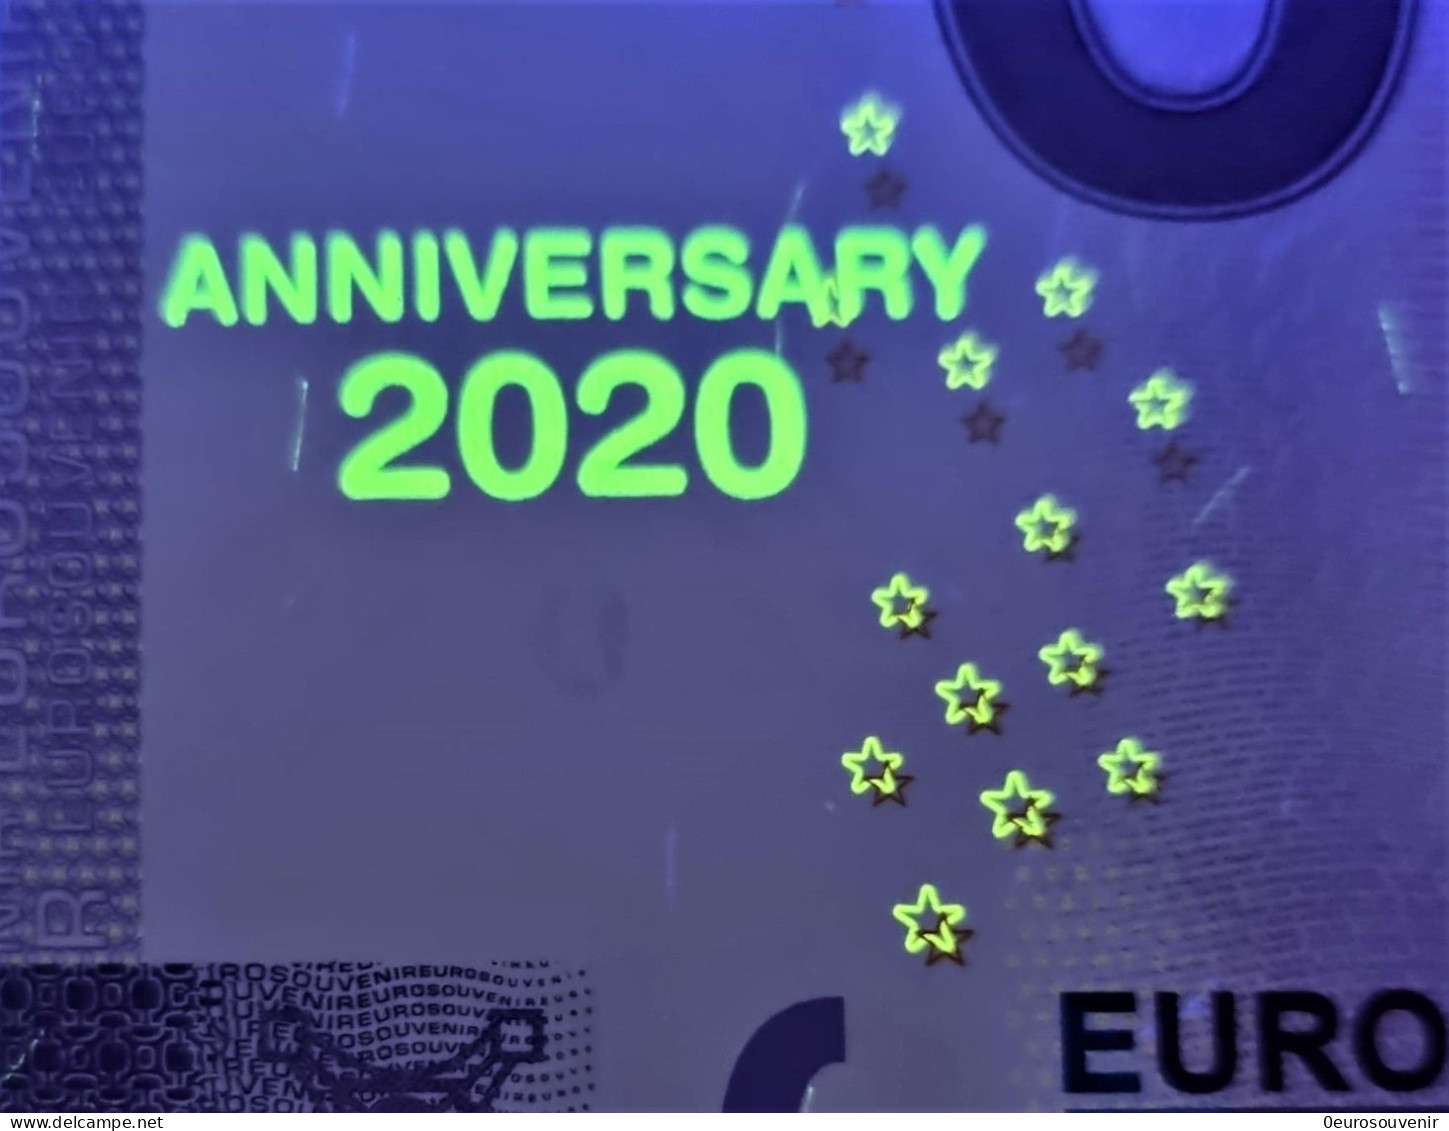 0-Euro XEMQ 1 2020 KRUMMHÖRN-GREETSIEL - CAMPENER LEUCHTTURM Set NORMAL+ANNIVERSARY - Private Proofs / Unofficial